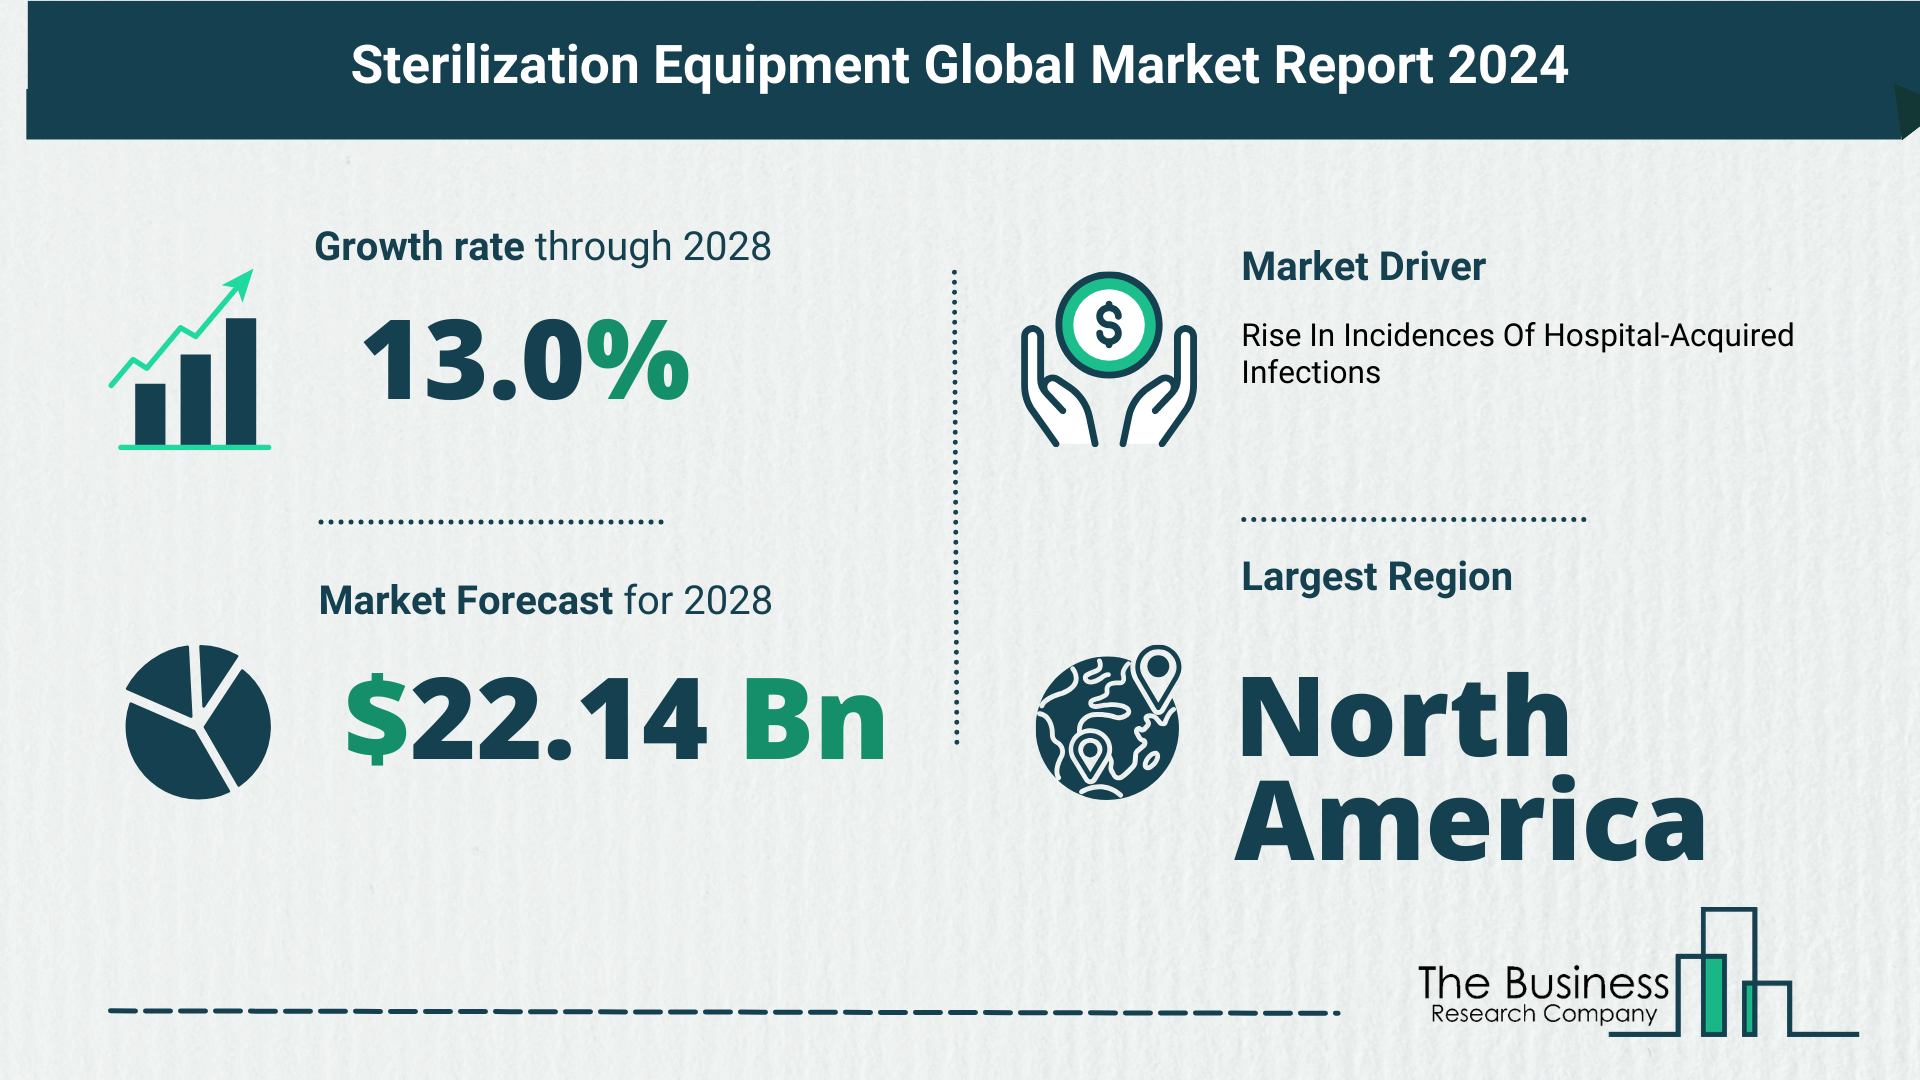 Global Sterilization Equipment Market